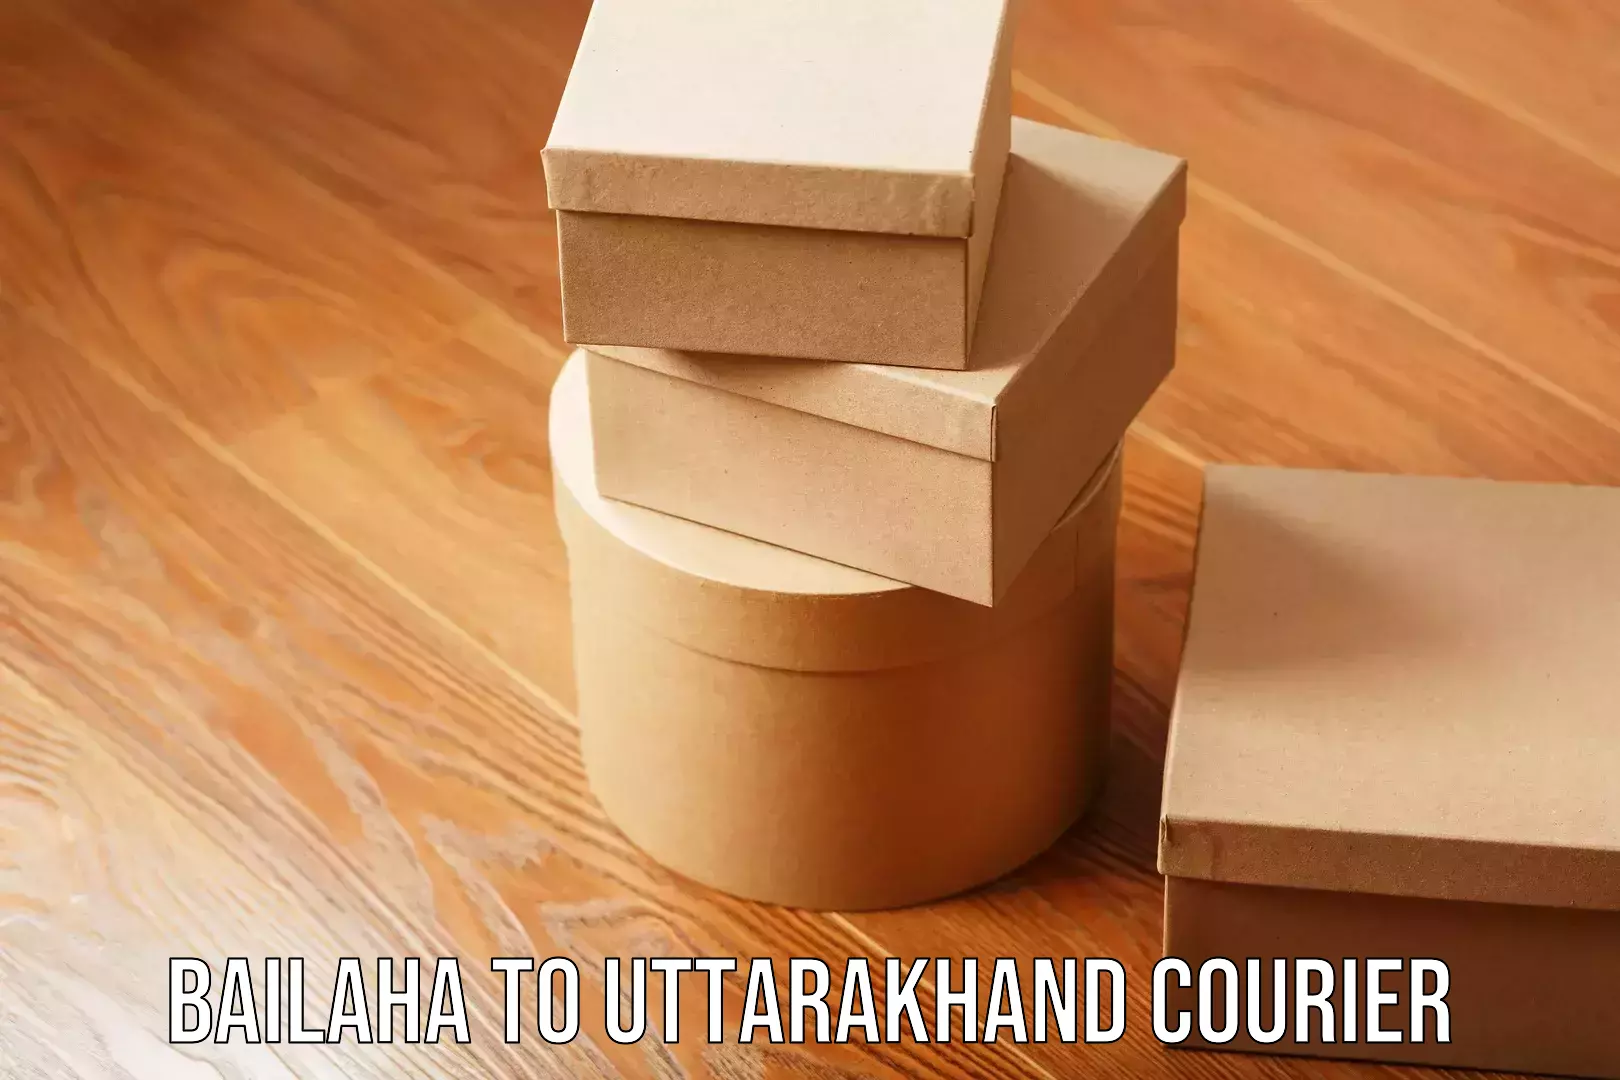 Courier service partnerships Bailaha to Uttarakhand